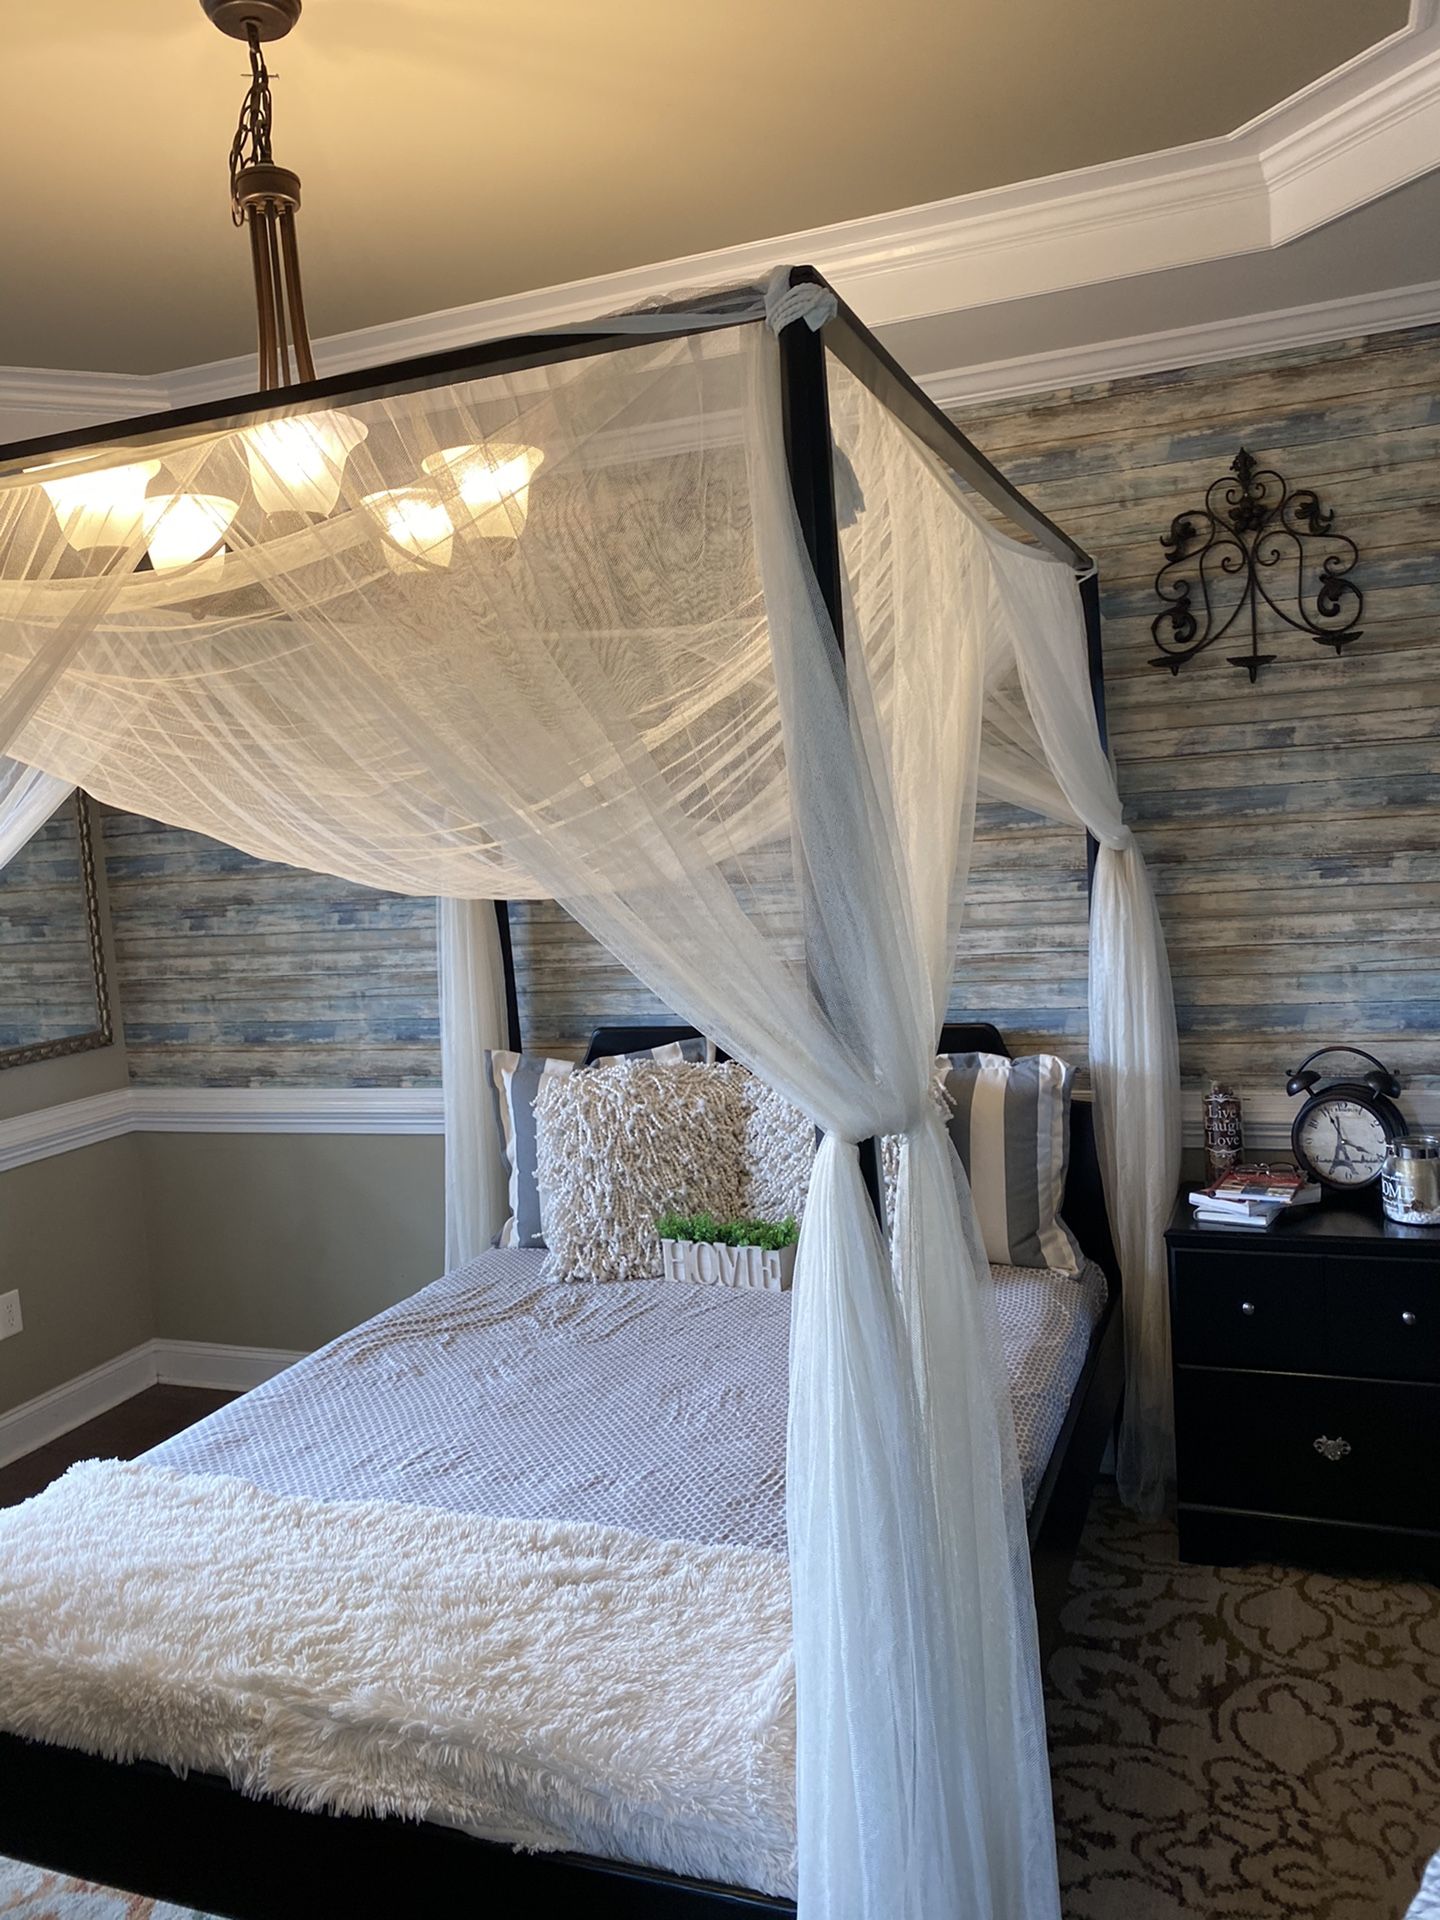 Queen canopy bedroom set “ No Mattress included”